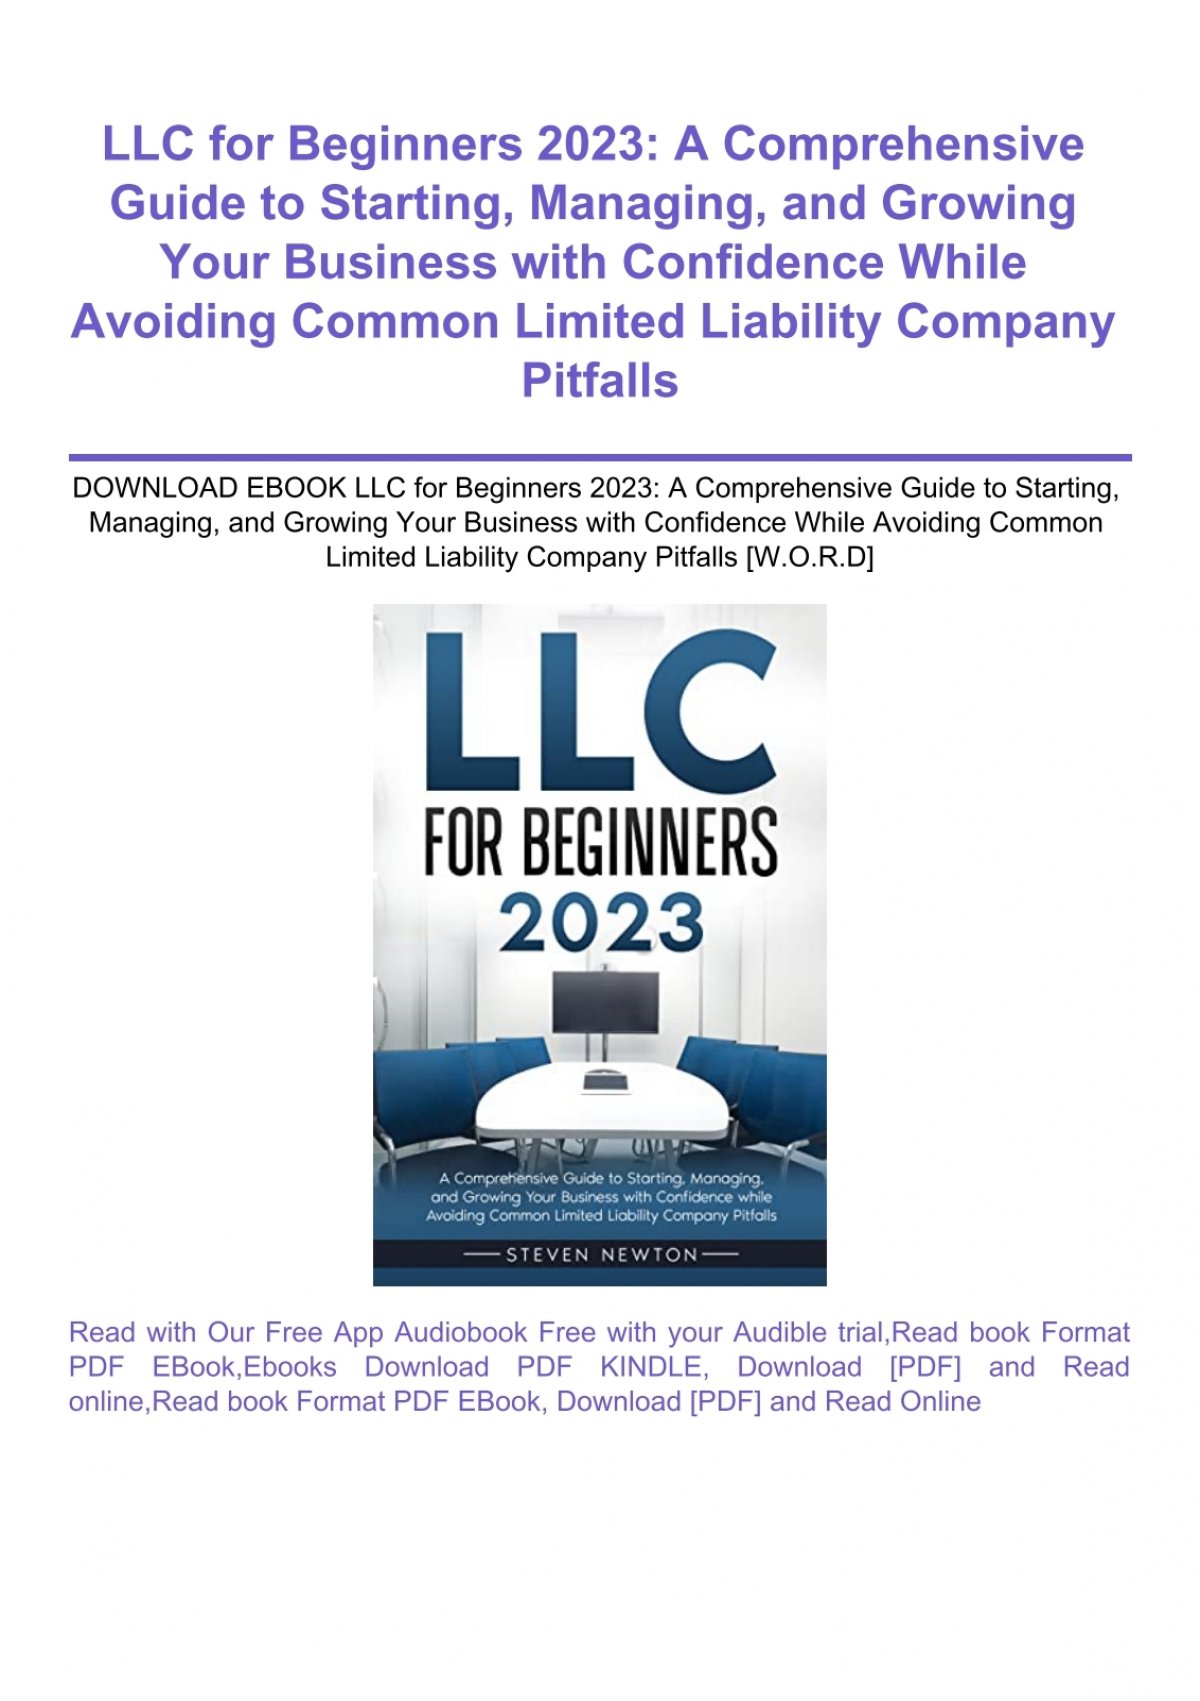 The LLC (Limited Liability Company) Handbook